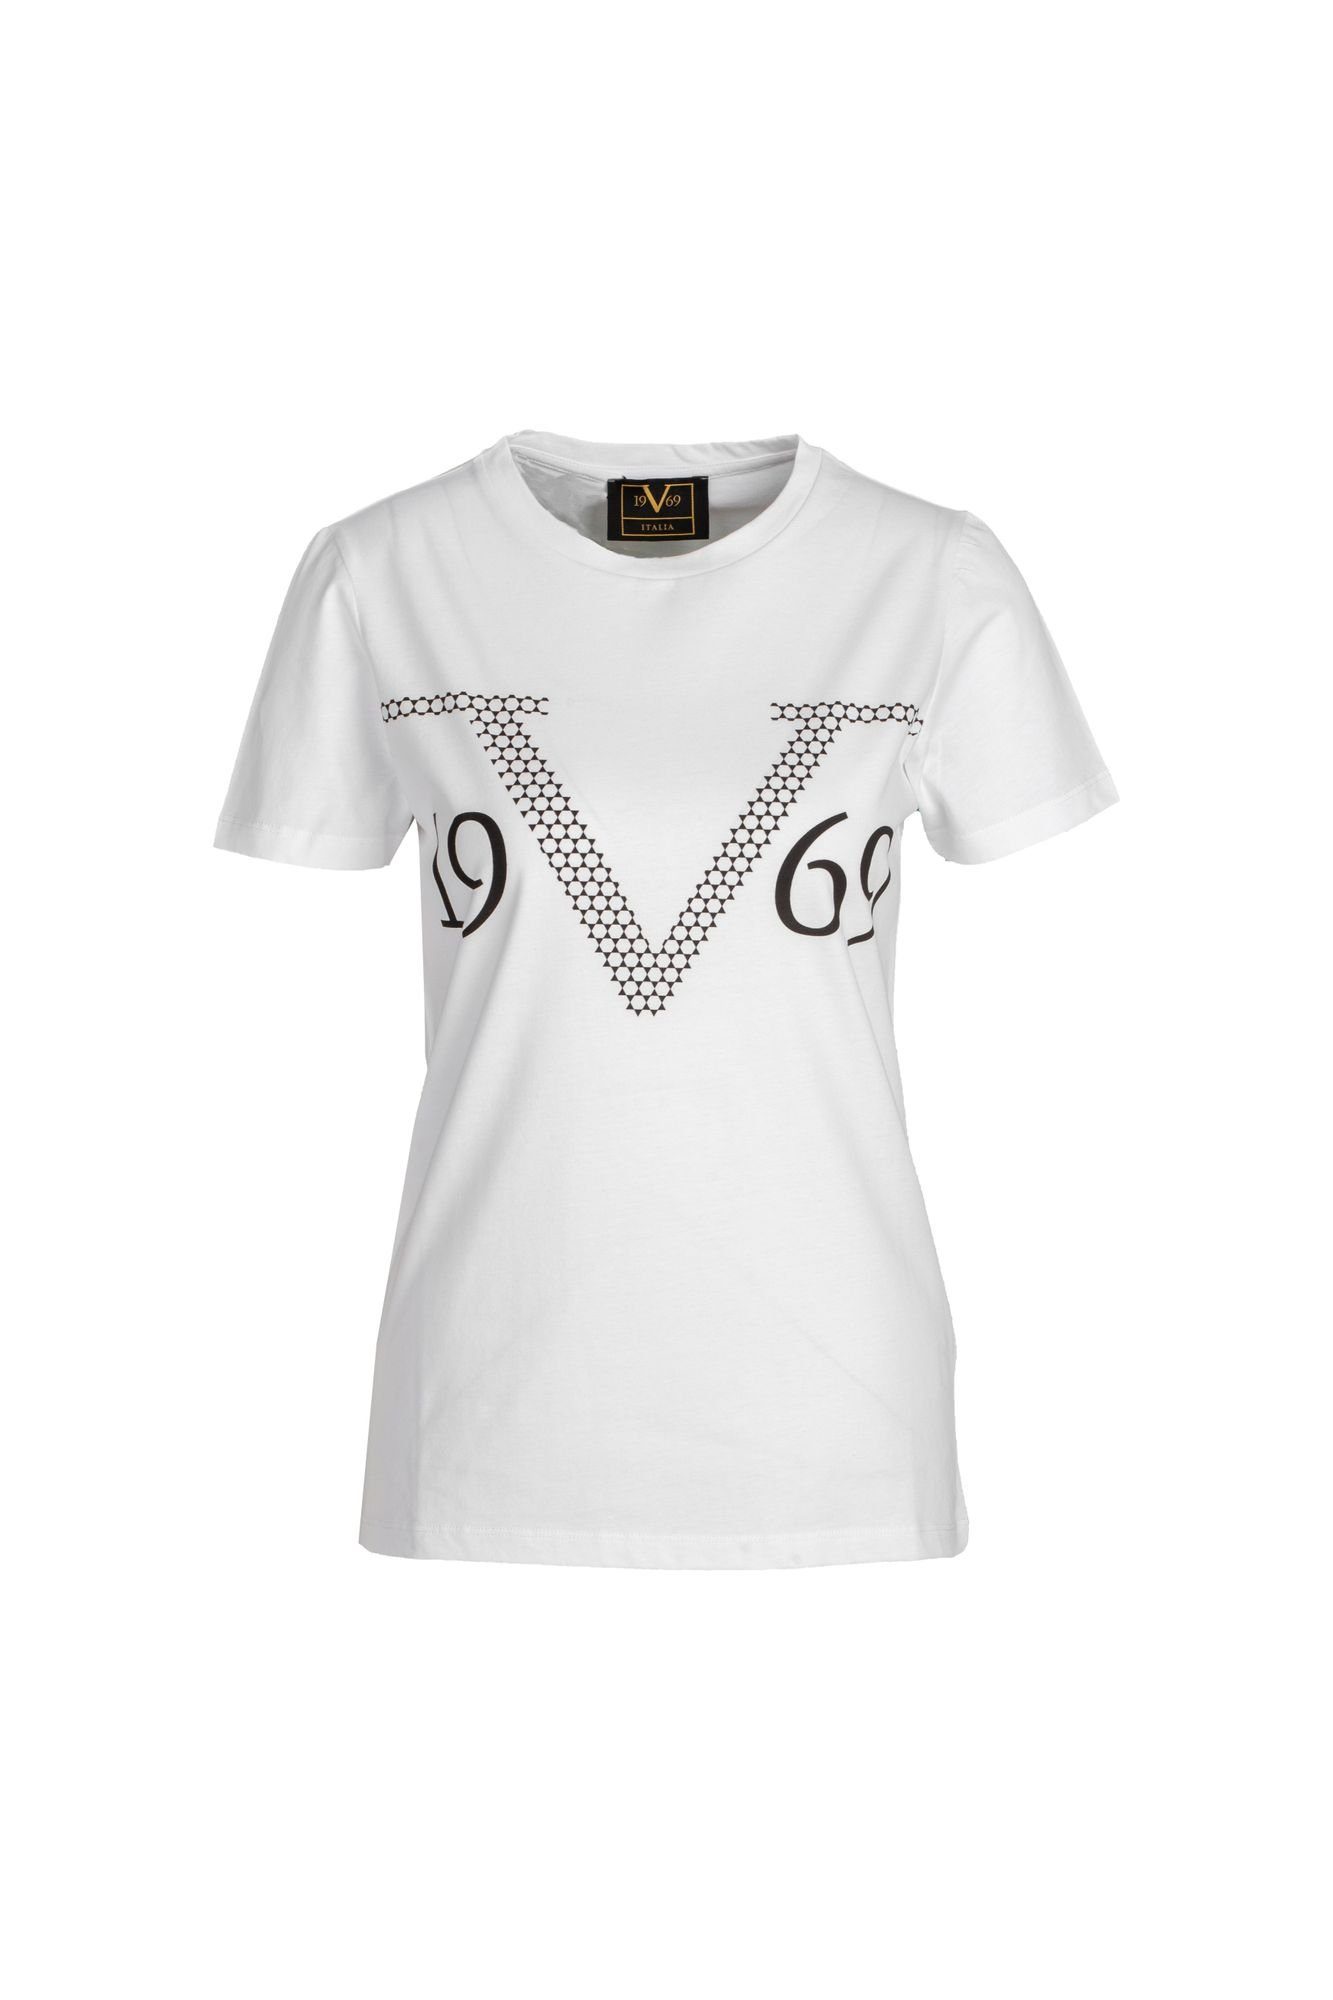 19V69 Italia by Versace T-Shirt online kaufen | OTTO